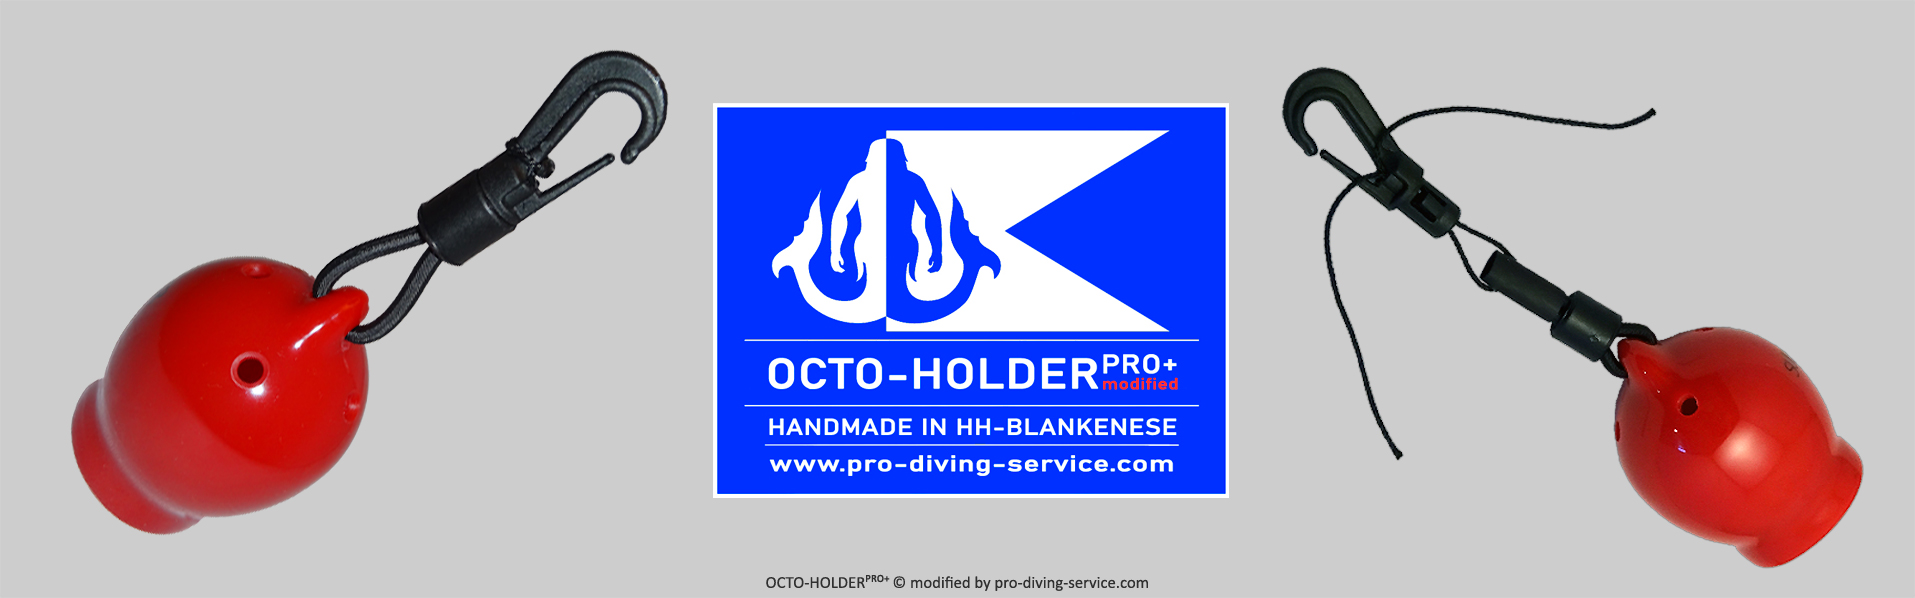 Pro Diving Service